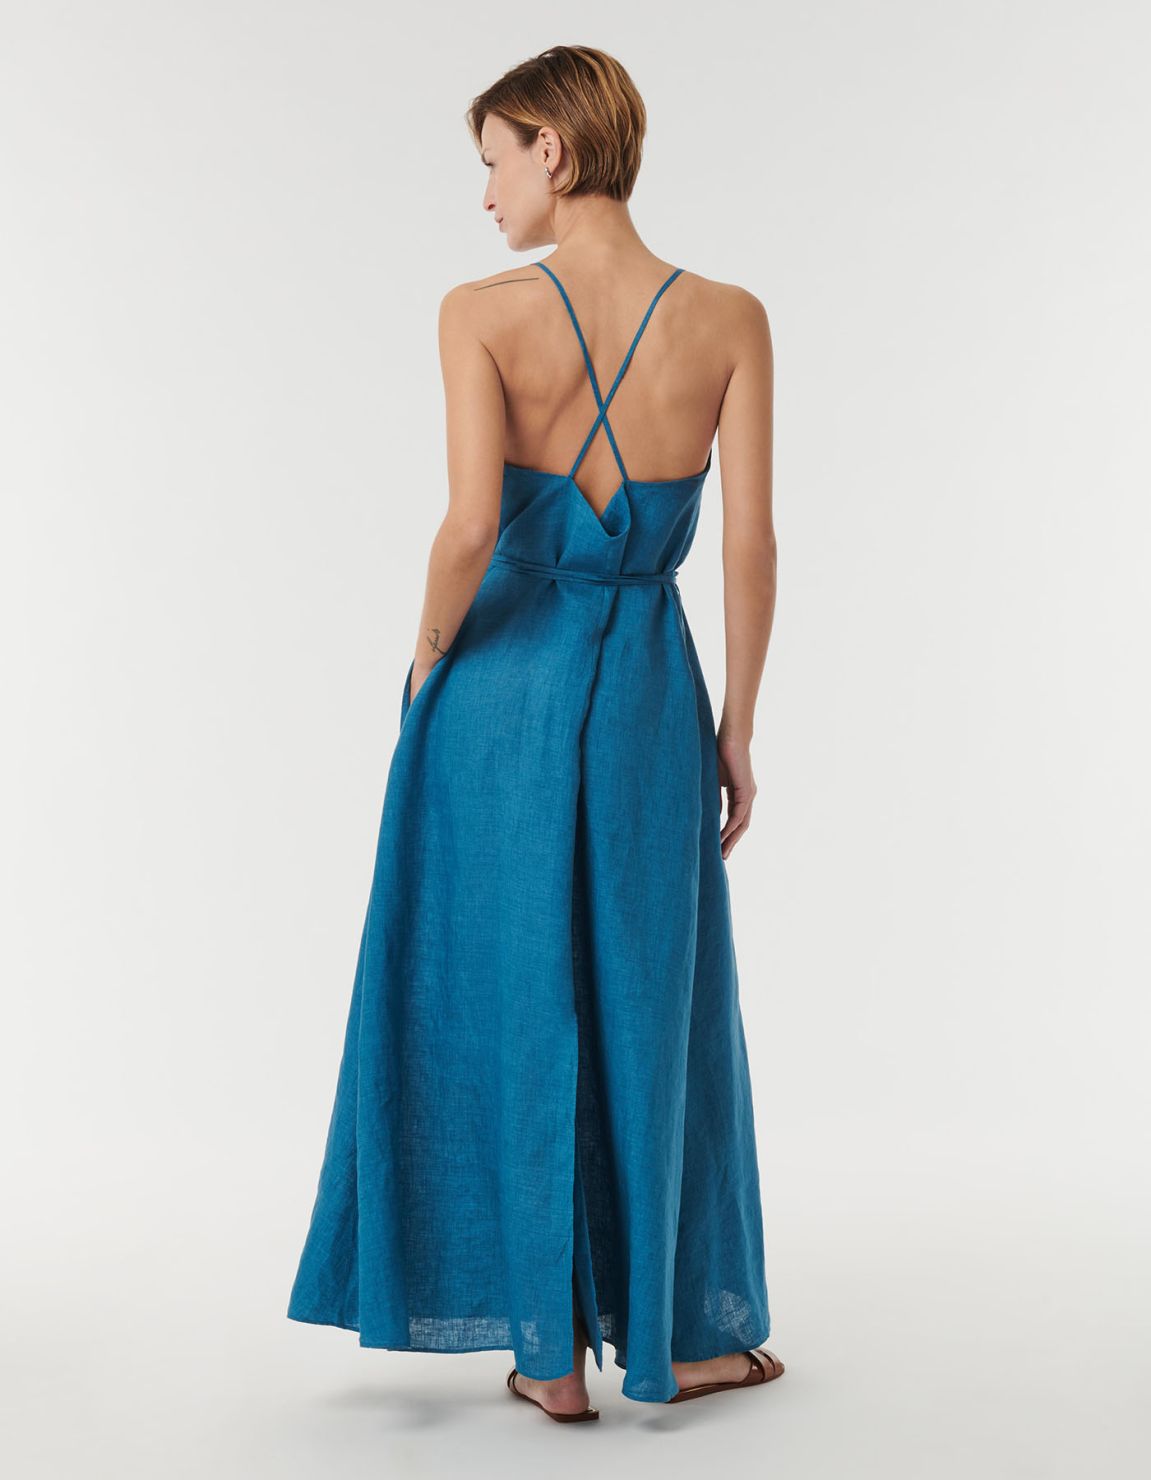 Kleid Pfauenblau Leinen Uni One Size 5